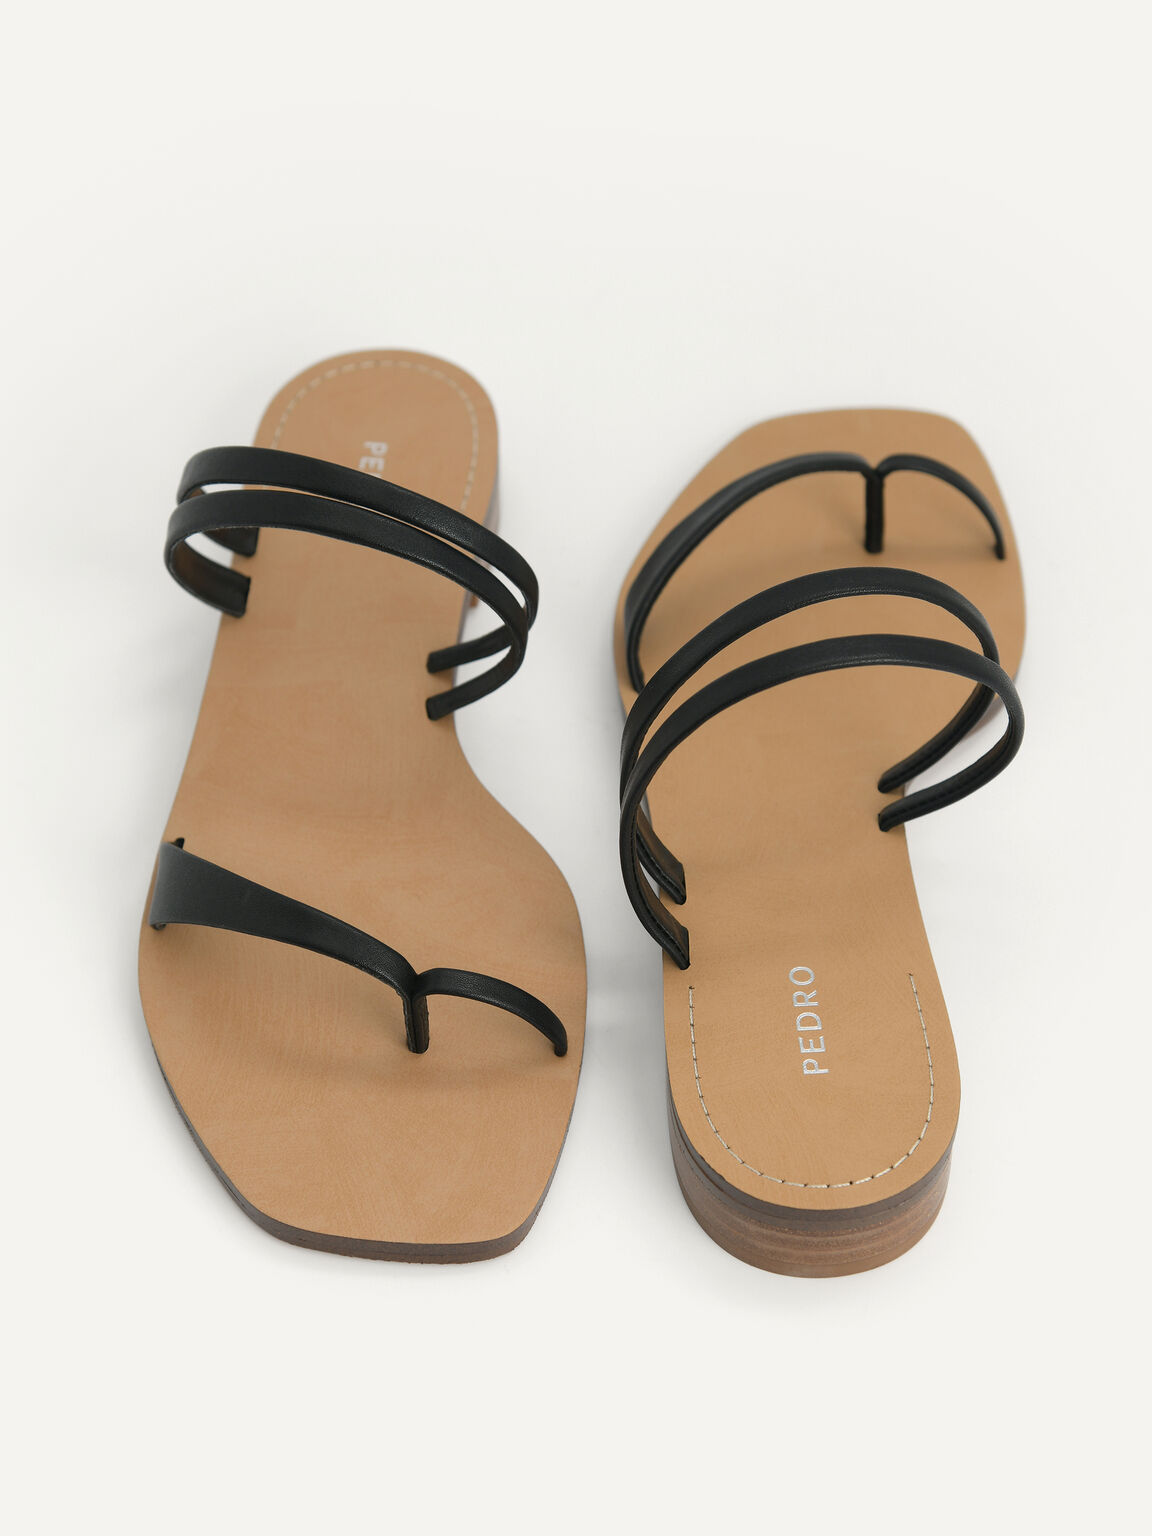 Strappy Toe Loop Sandals, Black